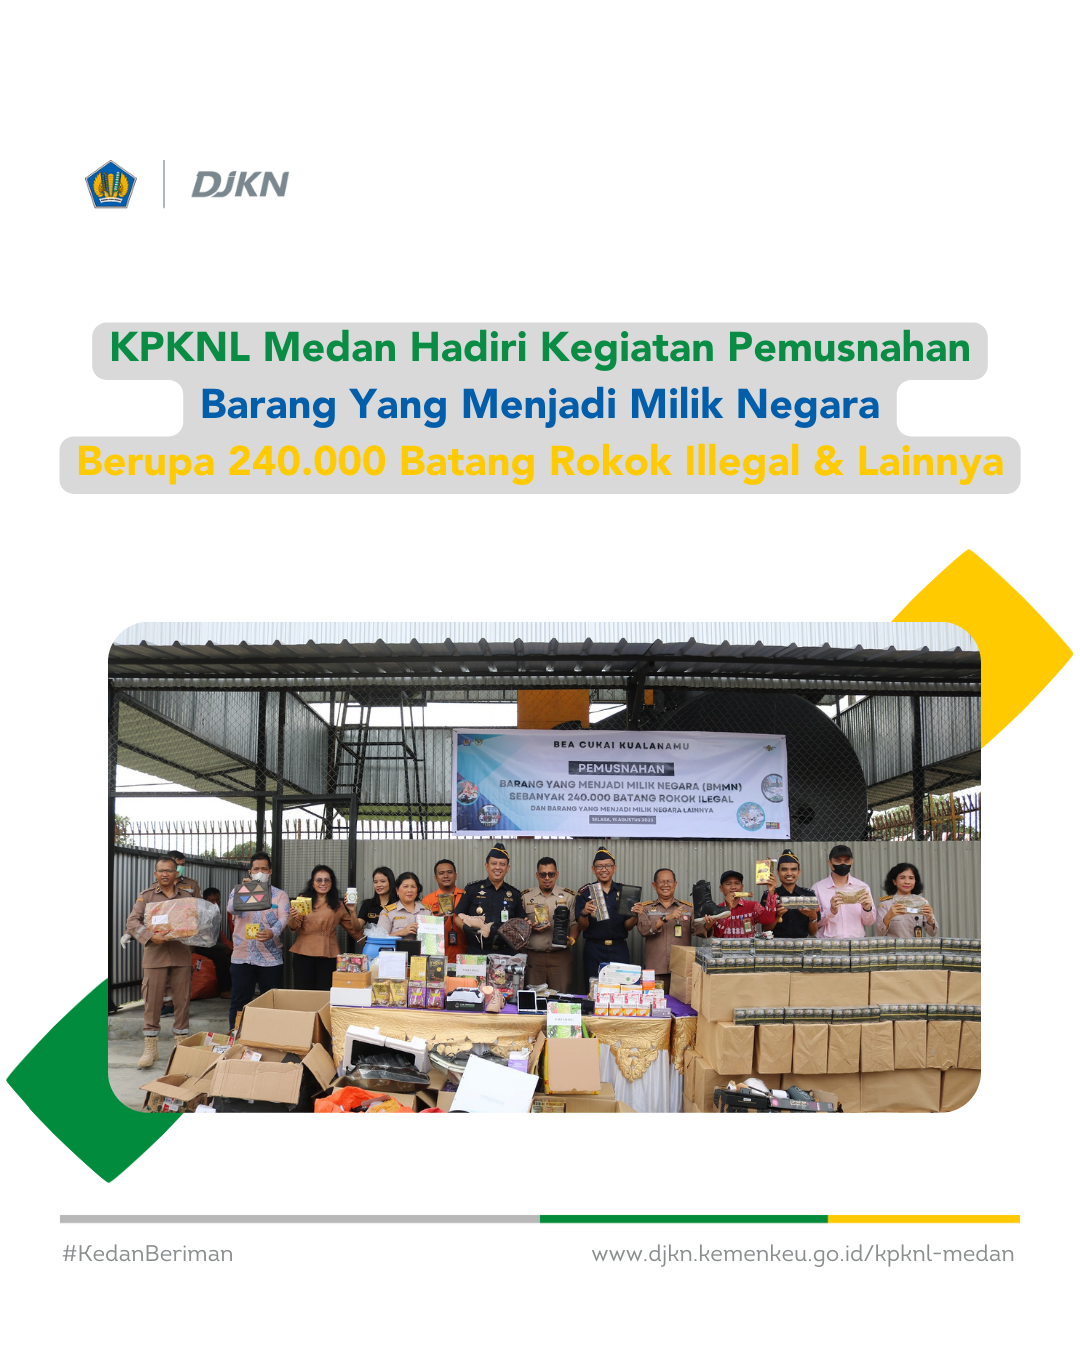 KPKNL Medan Hadiri Kegiatan Pemusnahan Barang Yang Menjadi Milik Negara Berupa 240.000 Batang Rokok Illegal dan Lainnya